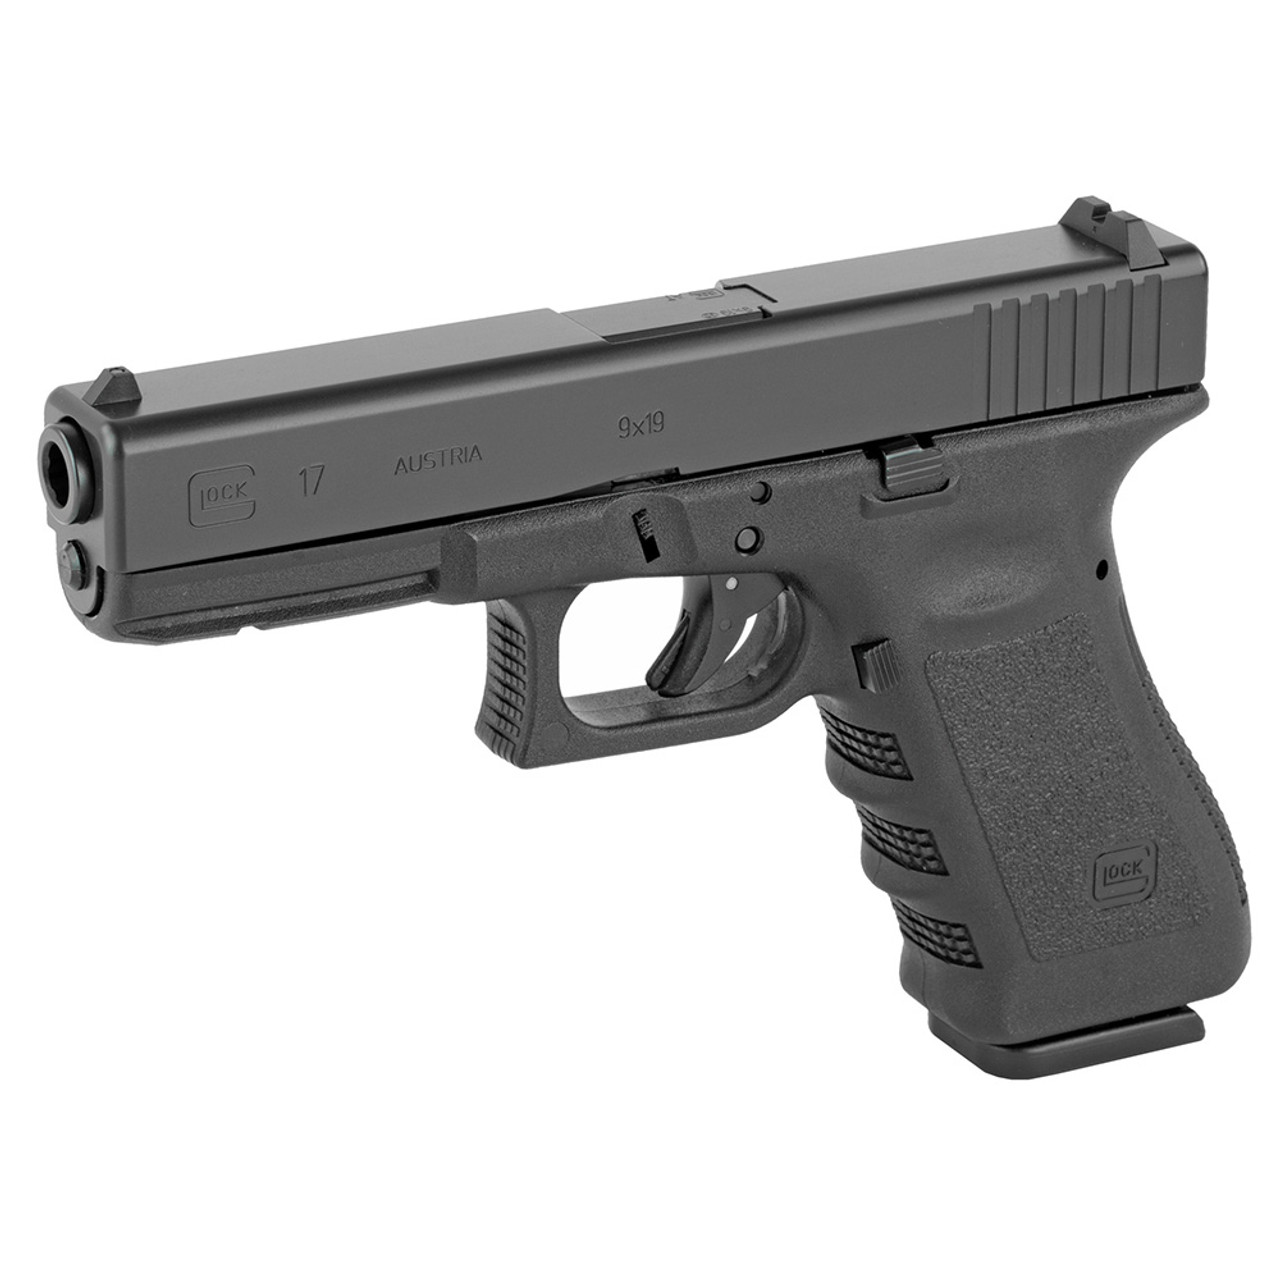 USED (Good Condition) Glock 17 Gen3 CALIFORNIA LEGAL - 9mm